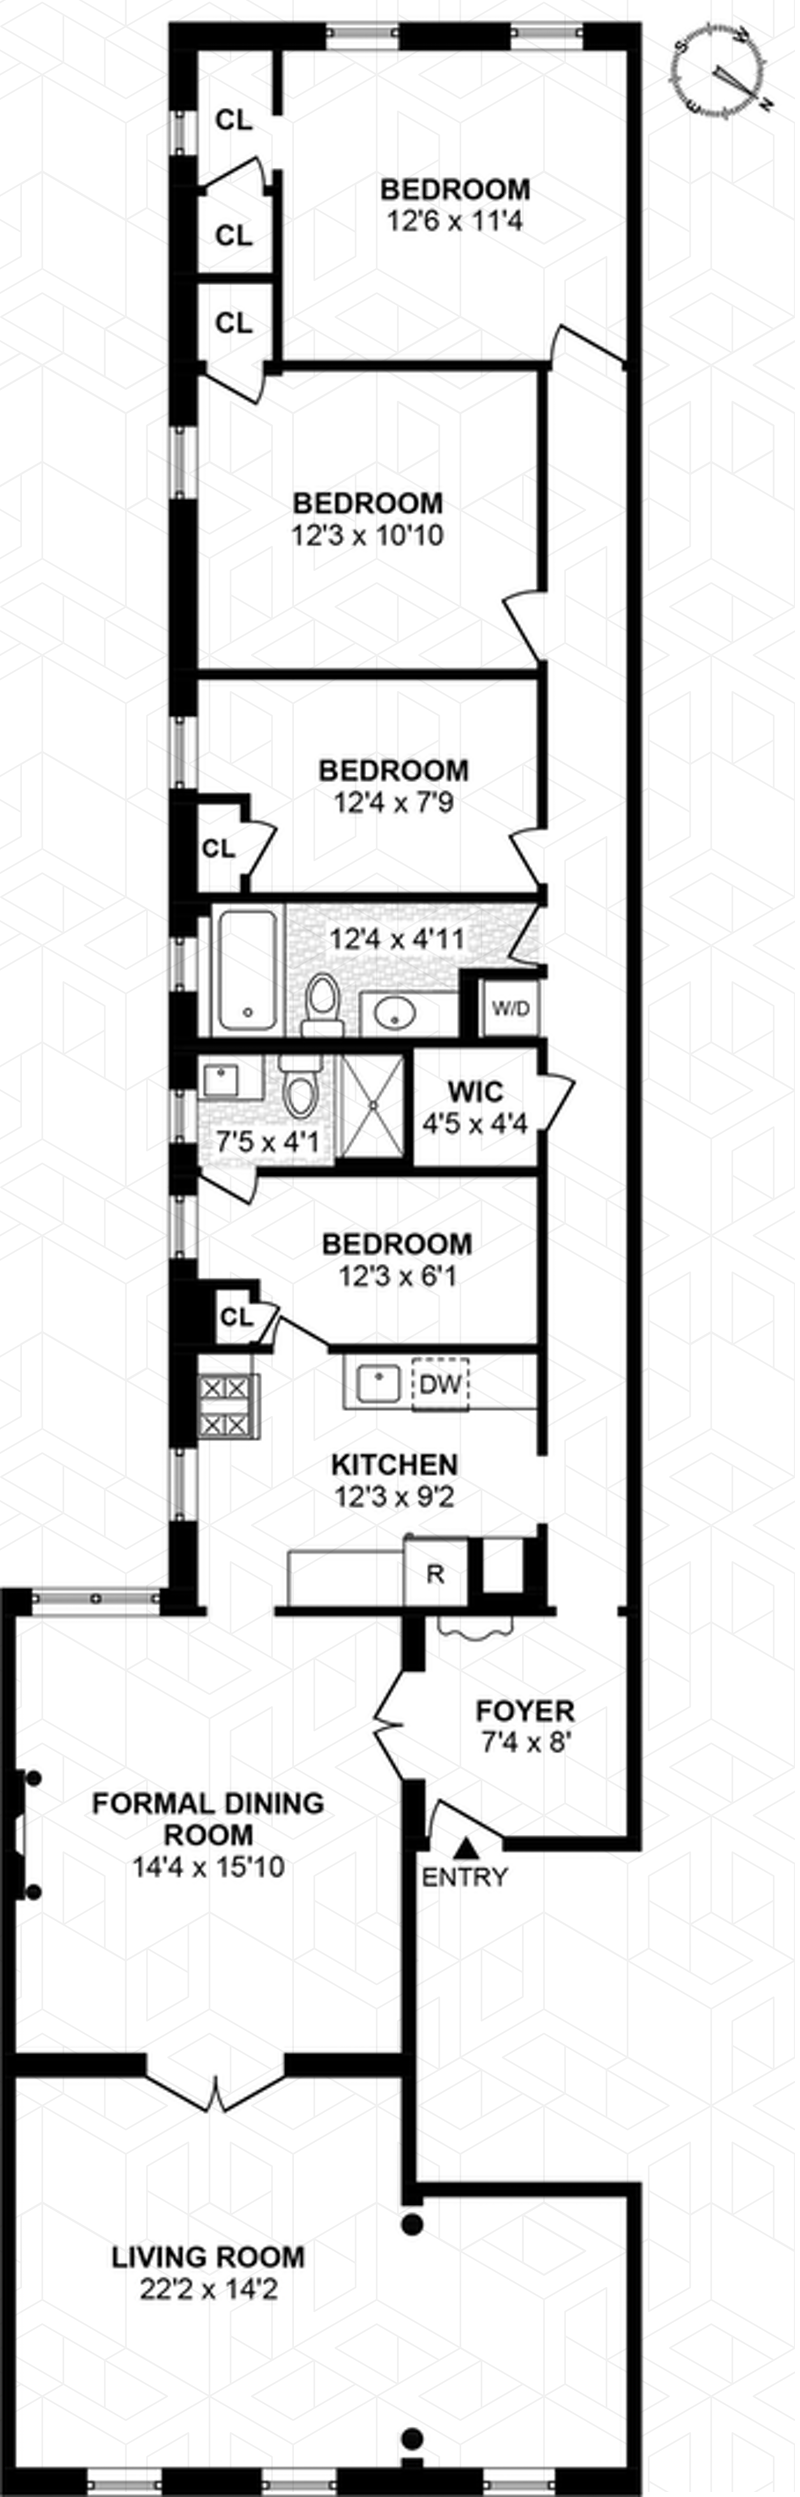 Floorplan for 566 5th Street, 2